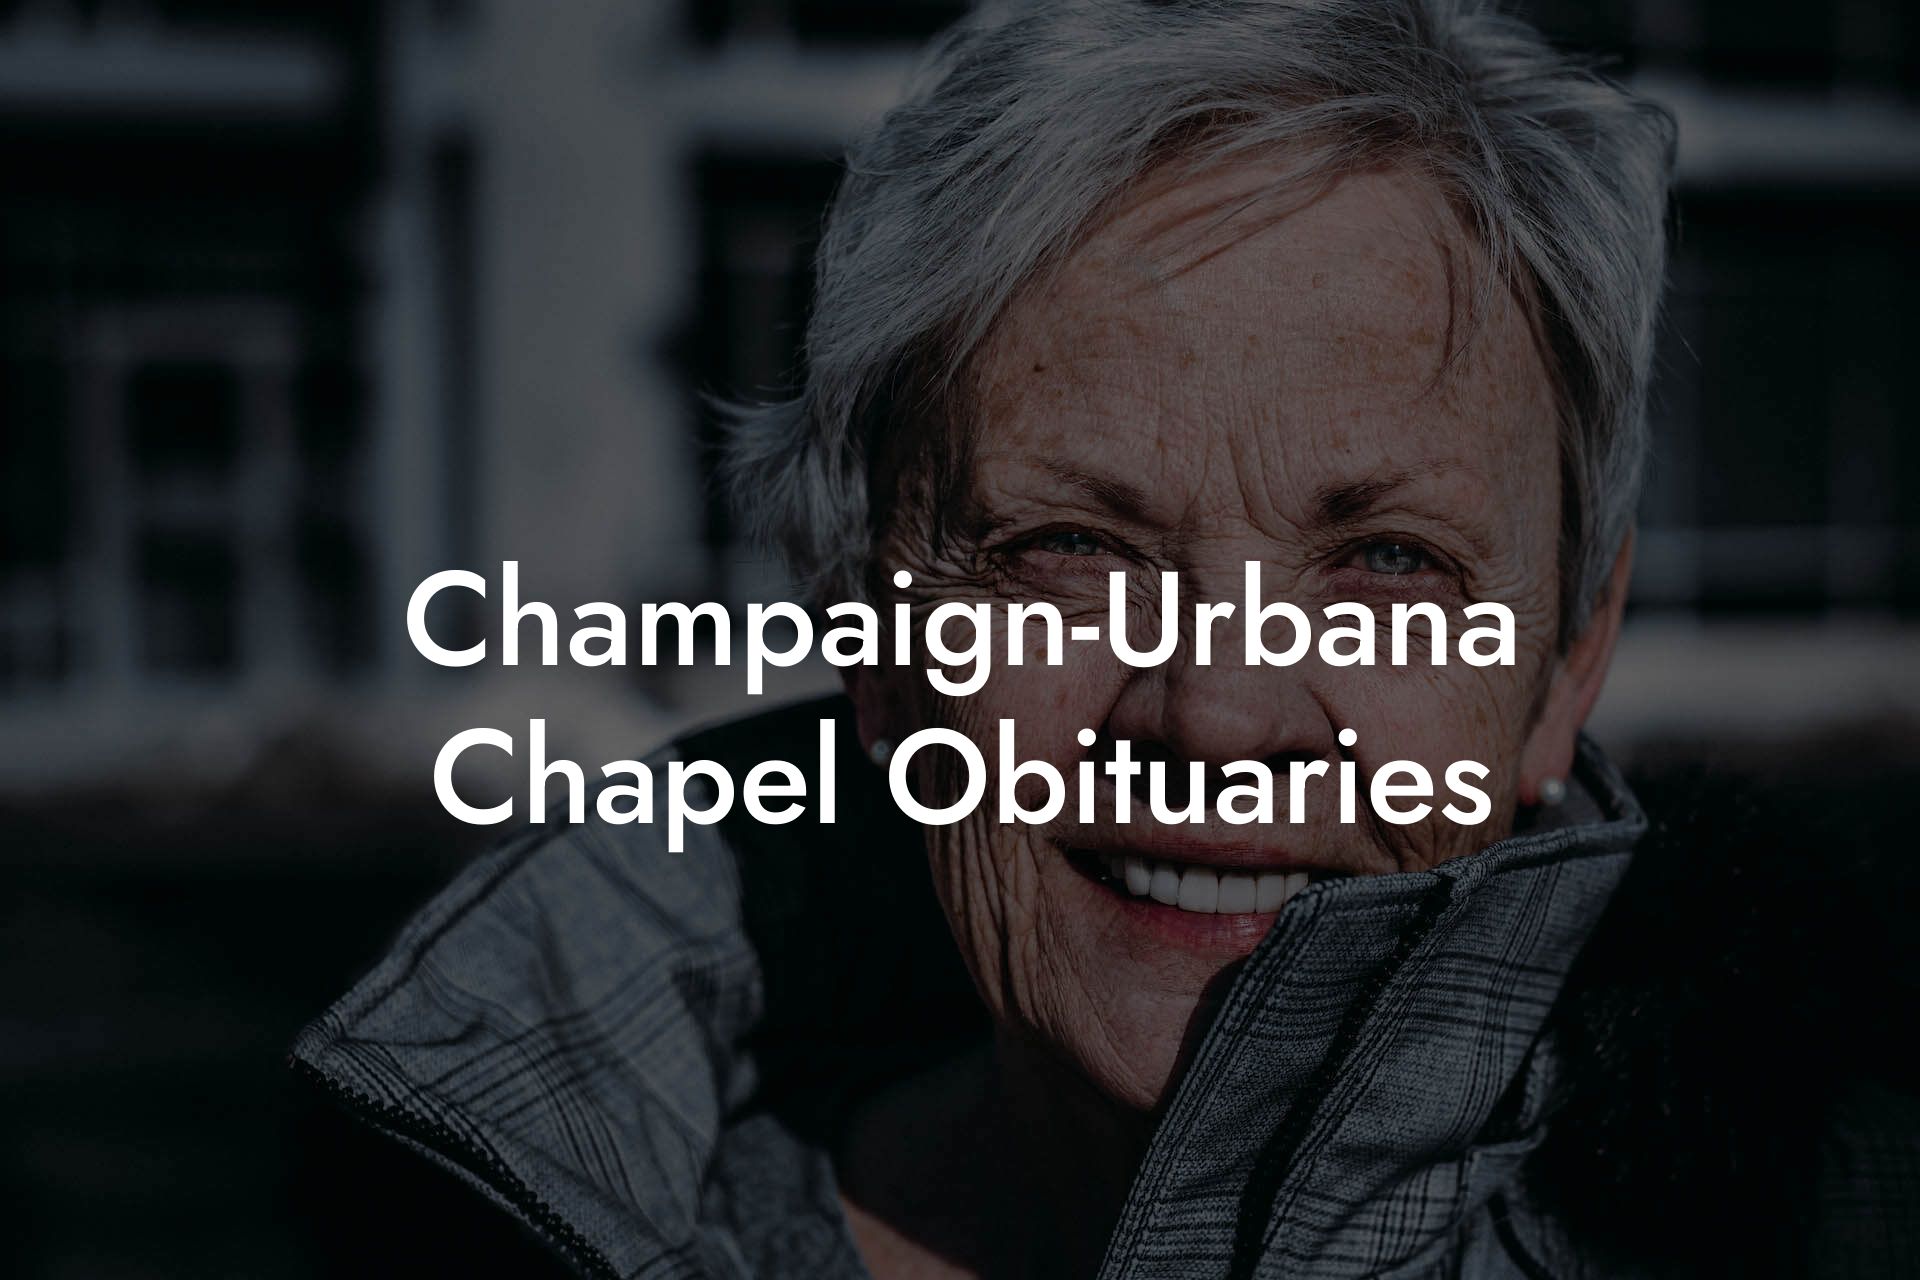 Champaign-Urbana Chapel Obituaries